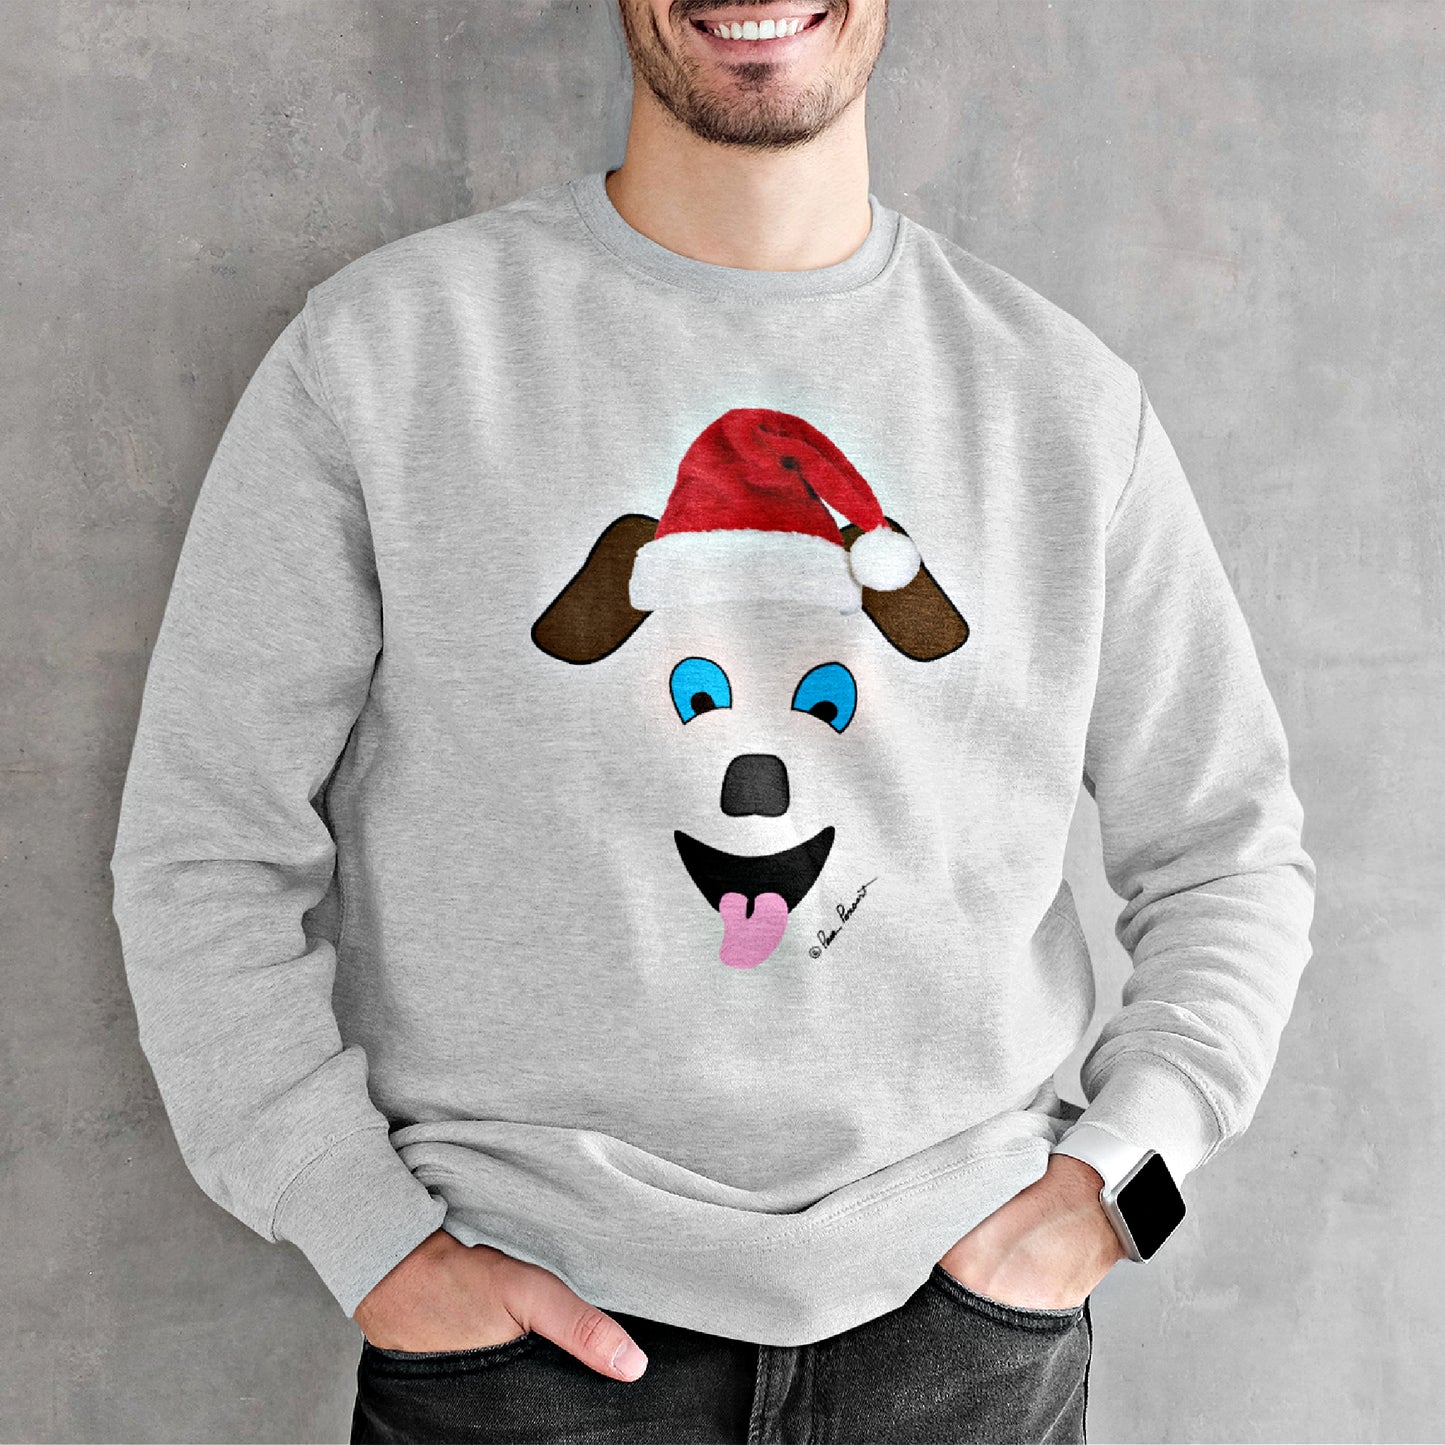 Mock up of a smiling man wearing our Ash Grey Santa Dog Sweatshirt        Swea